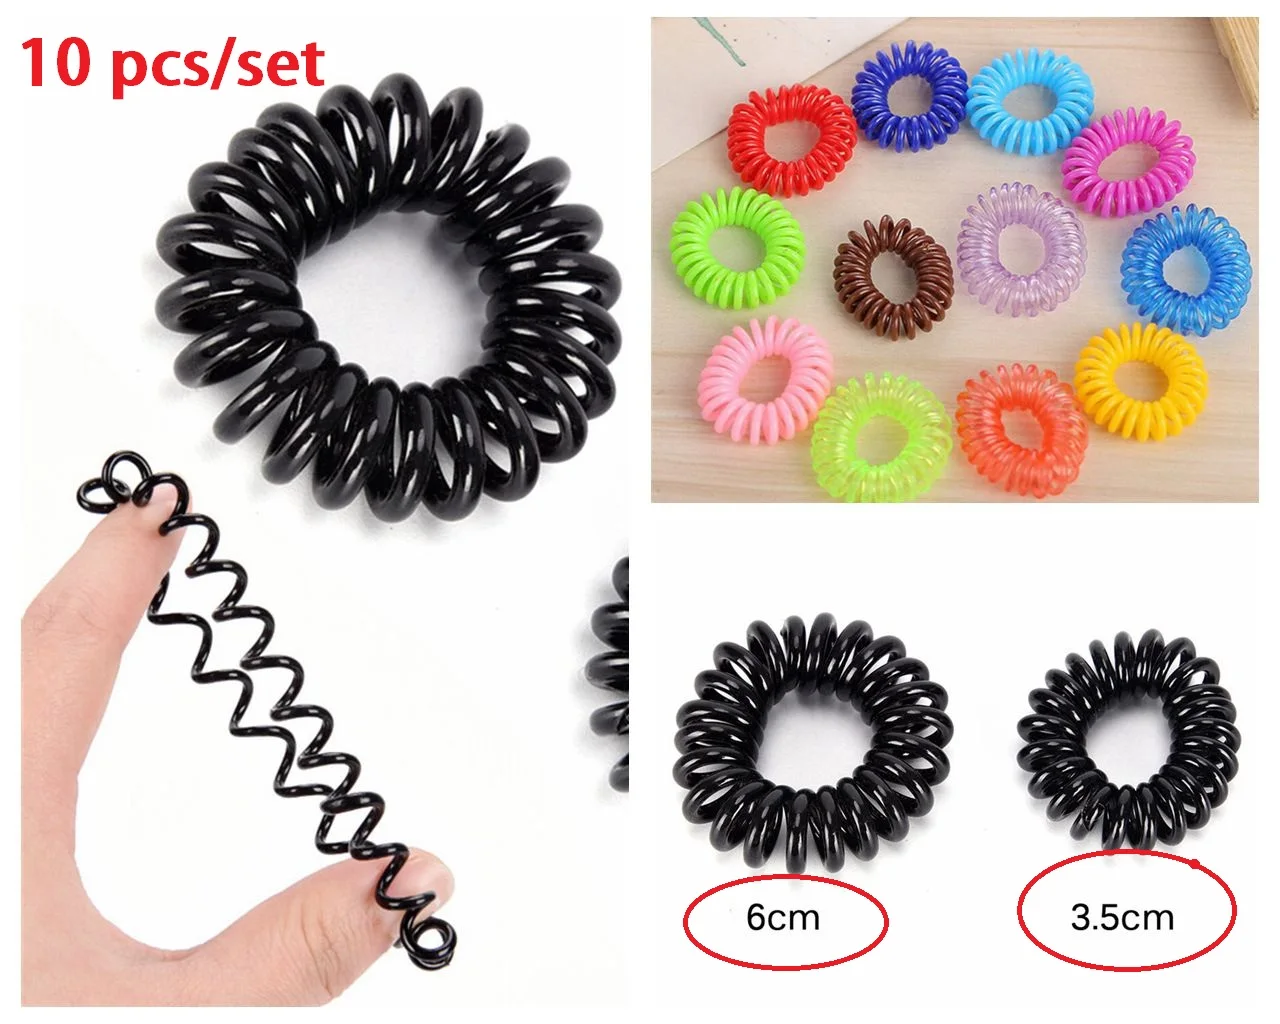 

10PCS/lot Rubber Band Headwear Rope Spiral Shape Elastic Hair Bands Girls Hair Accessories Hair Ties Gum Telephone Wire